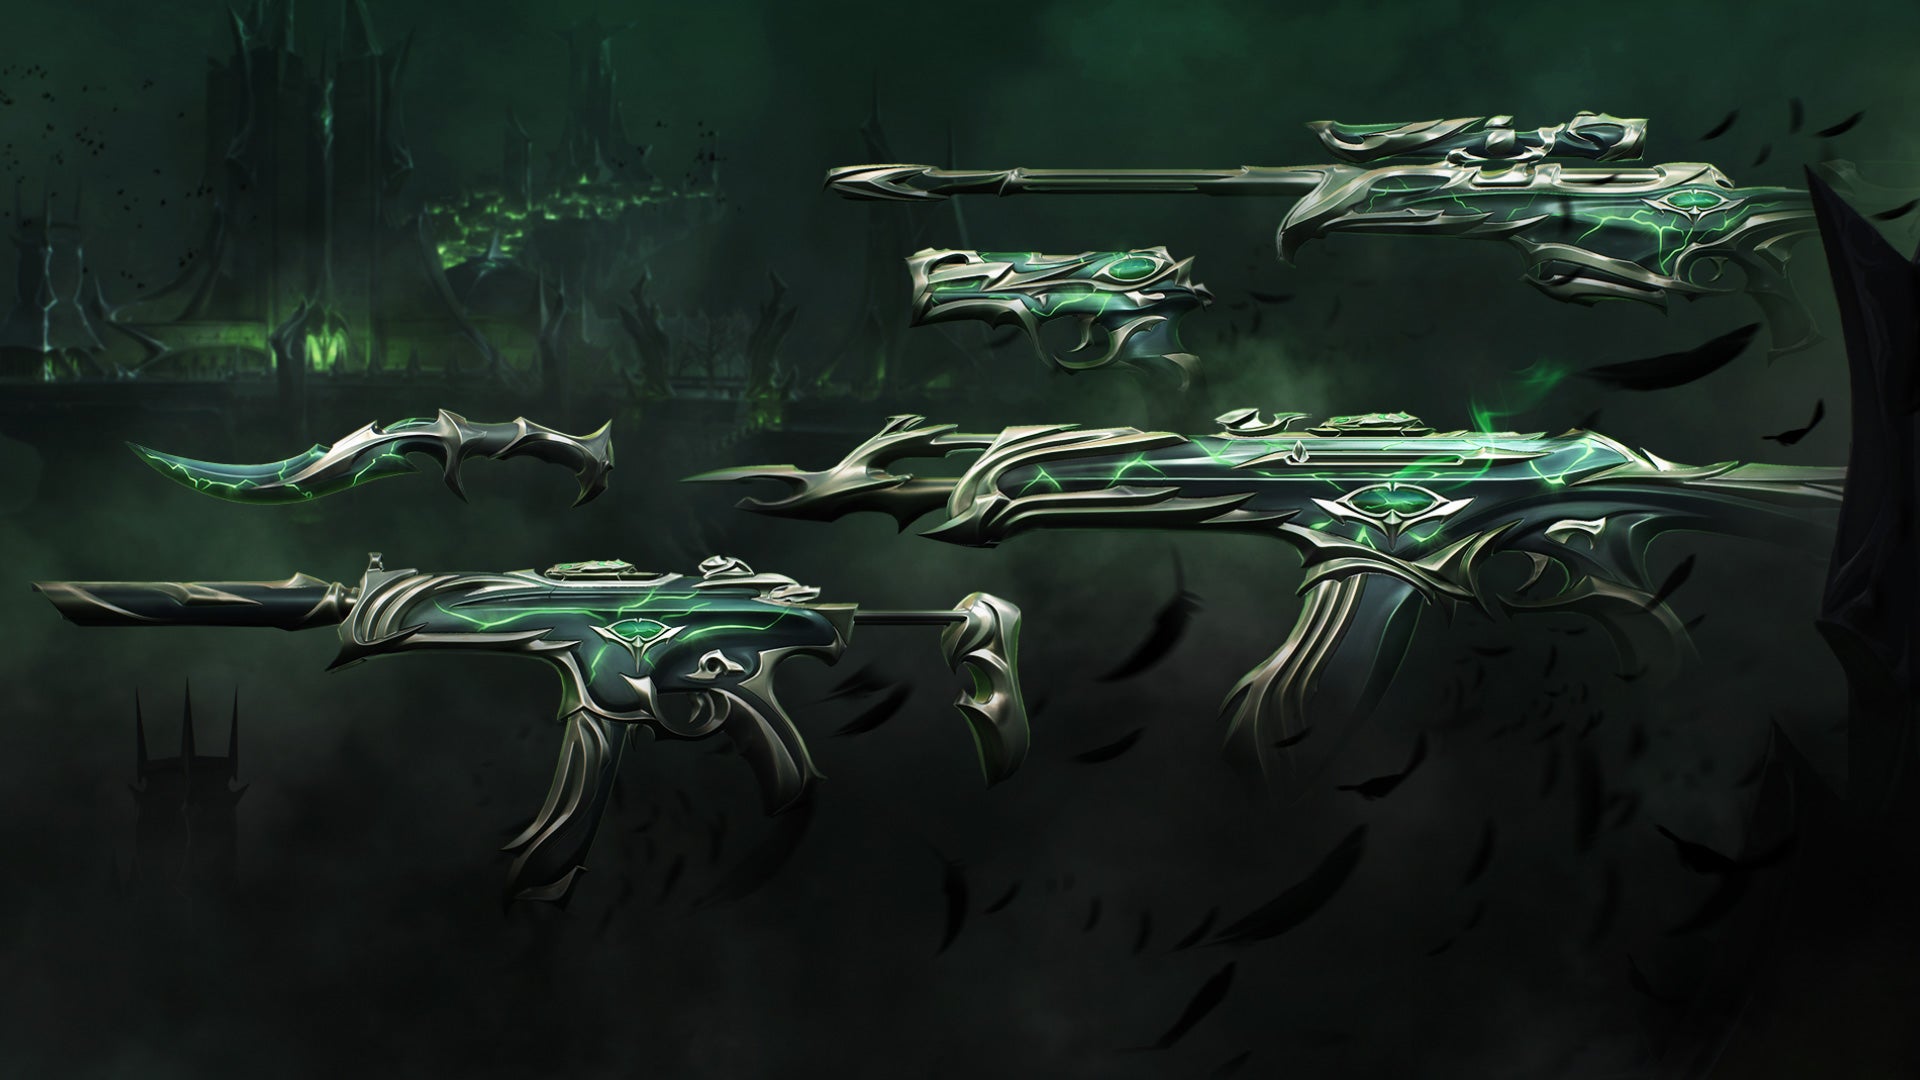 The glowing green Forsaken bundle of Valorant's new gun skins.